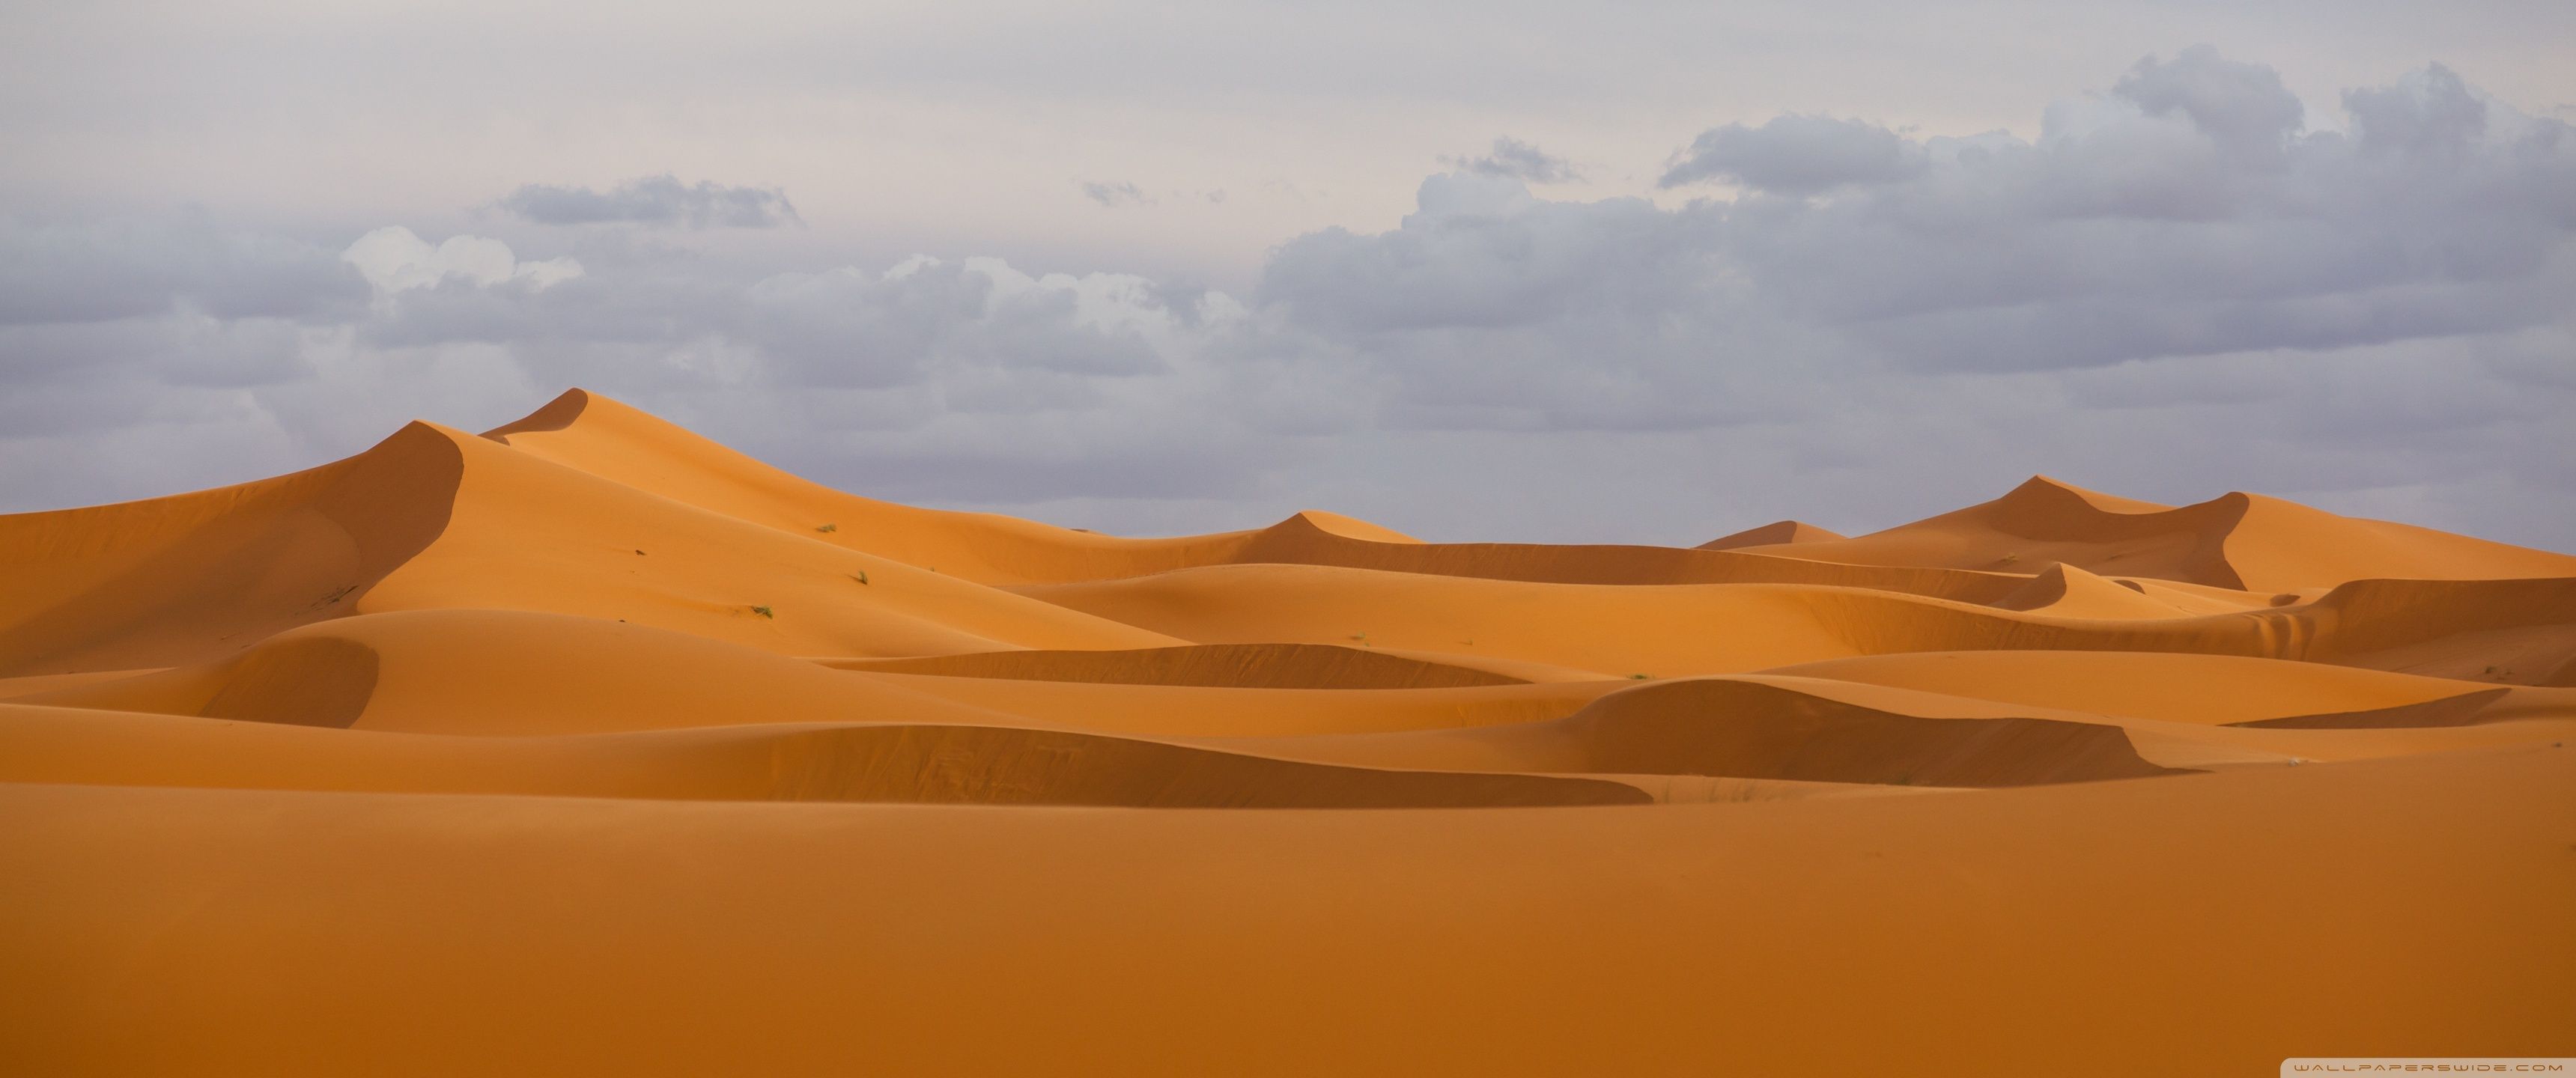 Desert Wallpapers   Top Free Desert Backgrounds